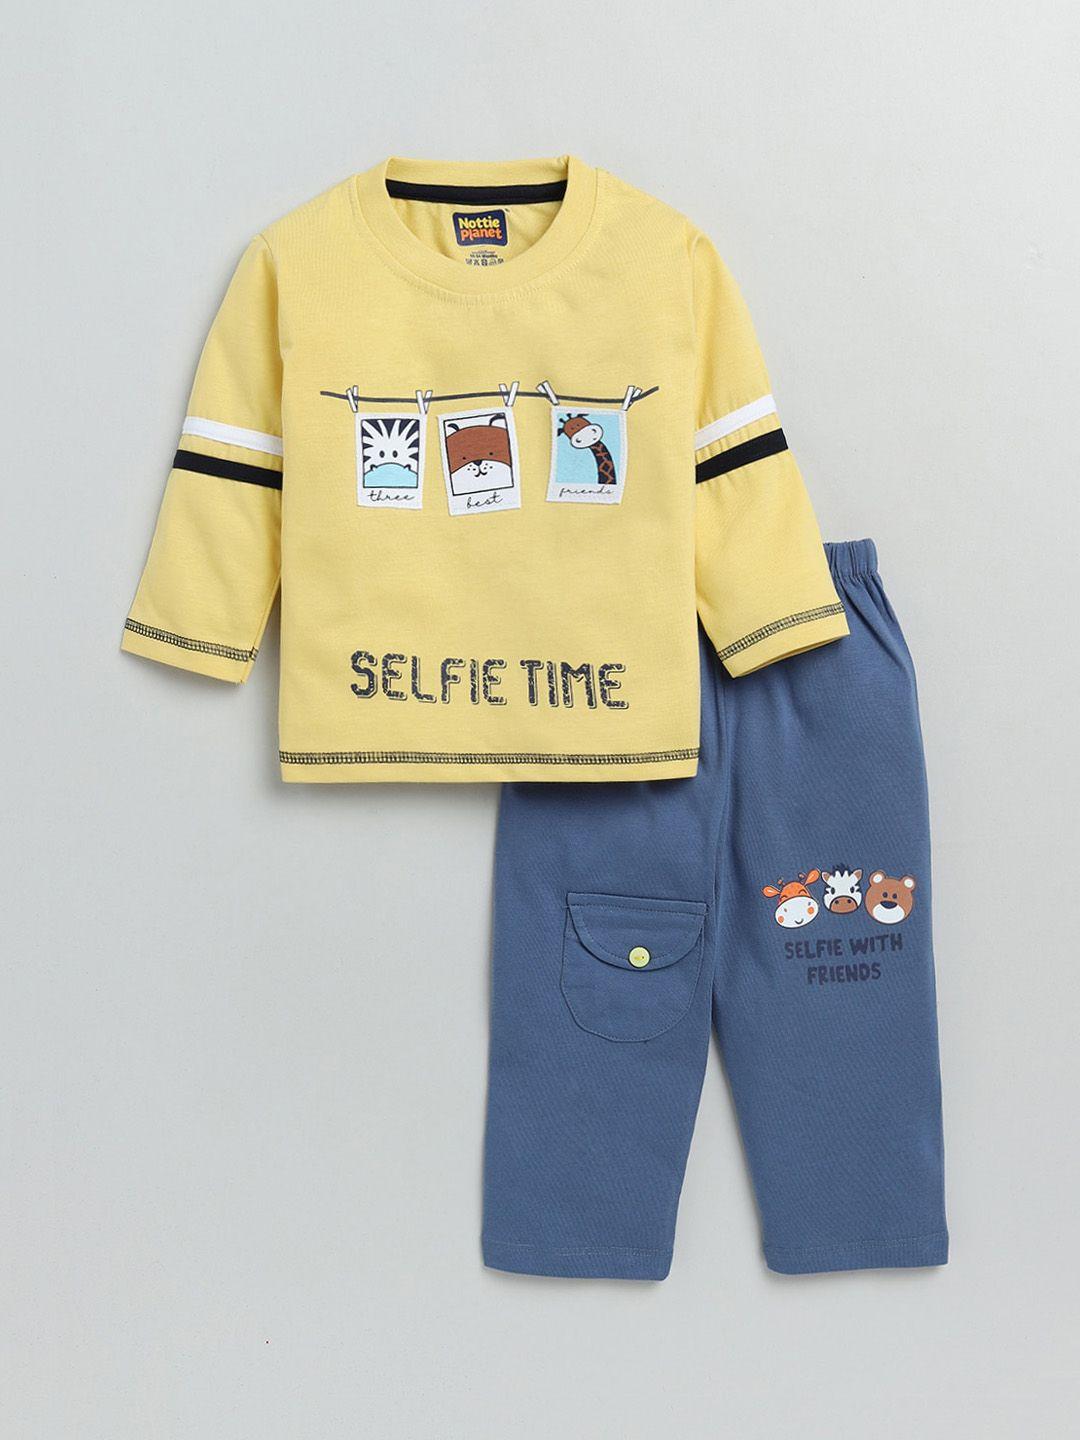 nottie planet boys yellow & blue printed pure cotton t-shirt with pyjamas